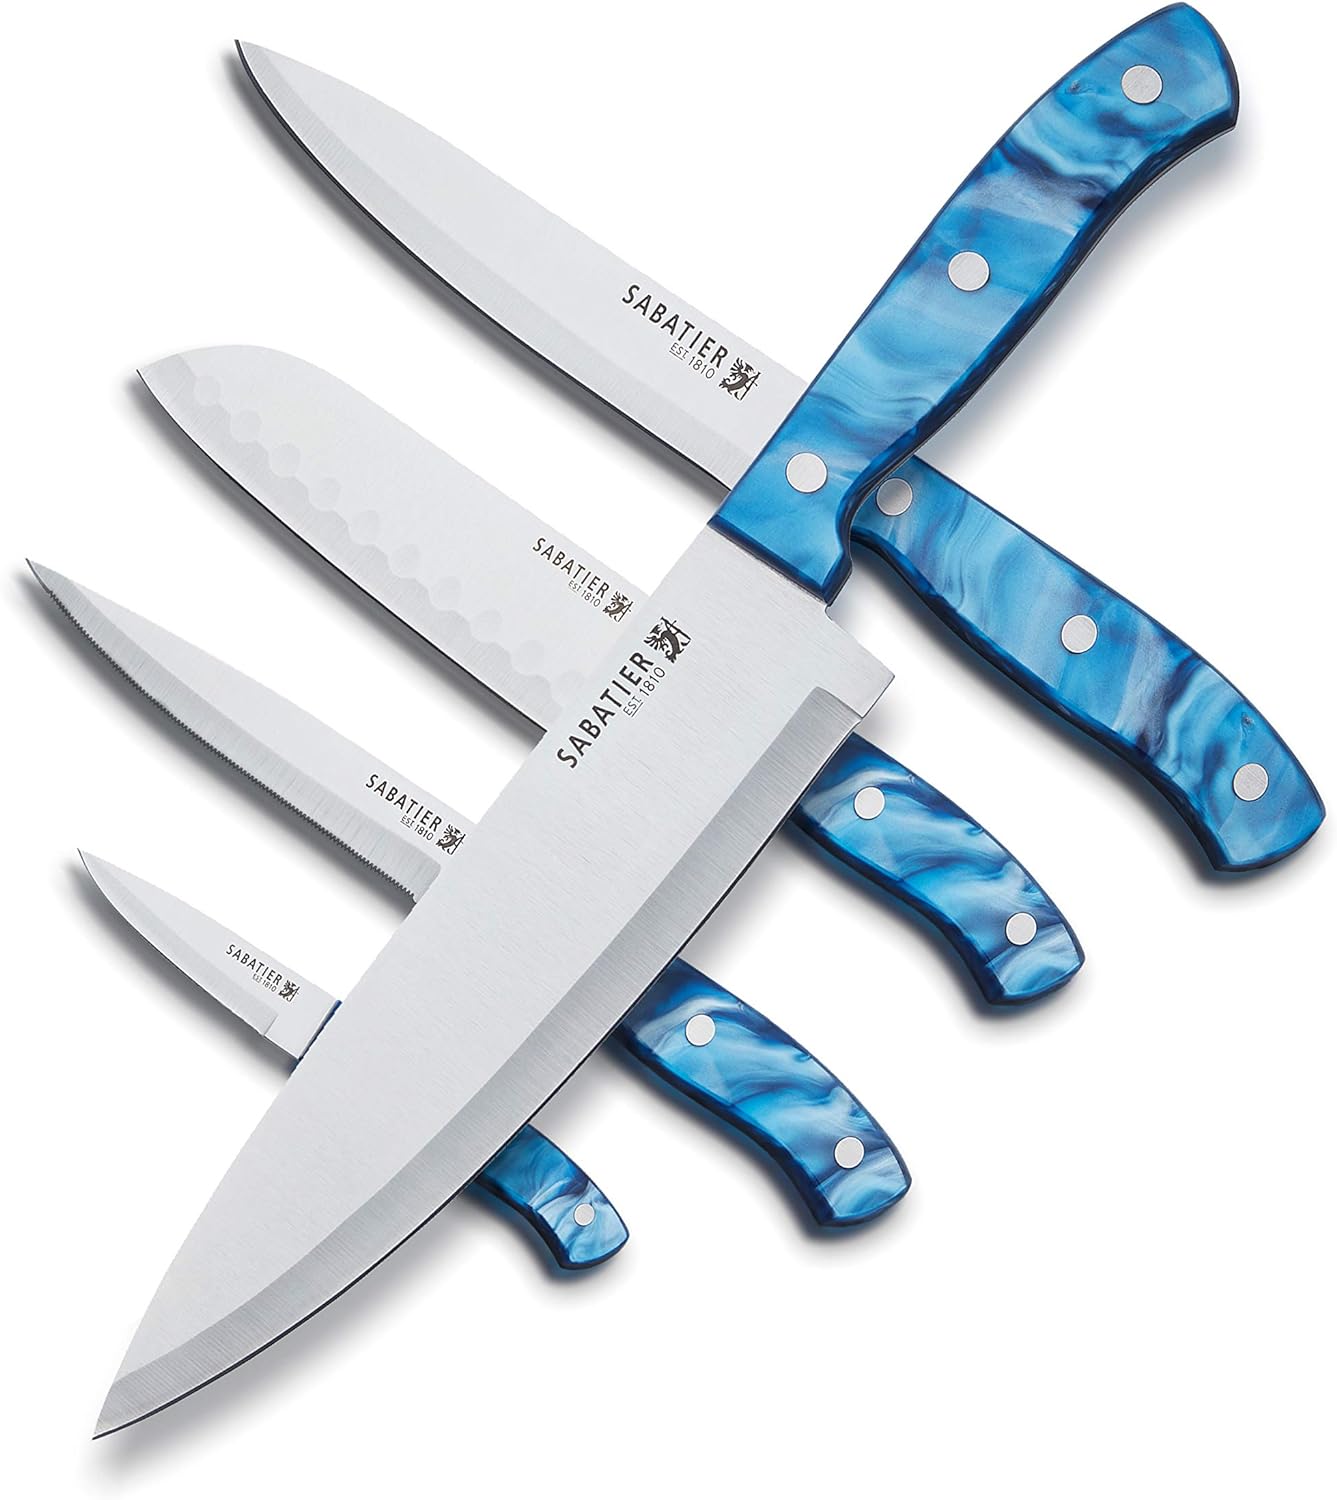 Sabatier Kitchen Knife Set Review